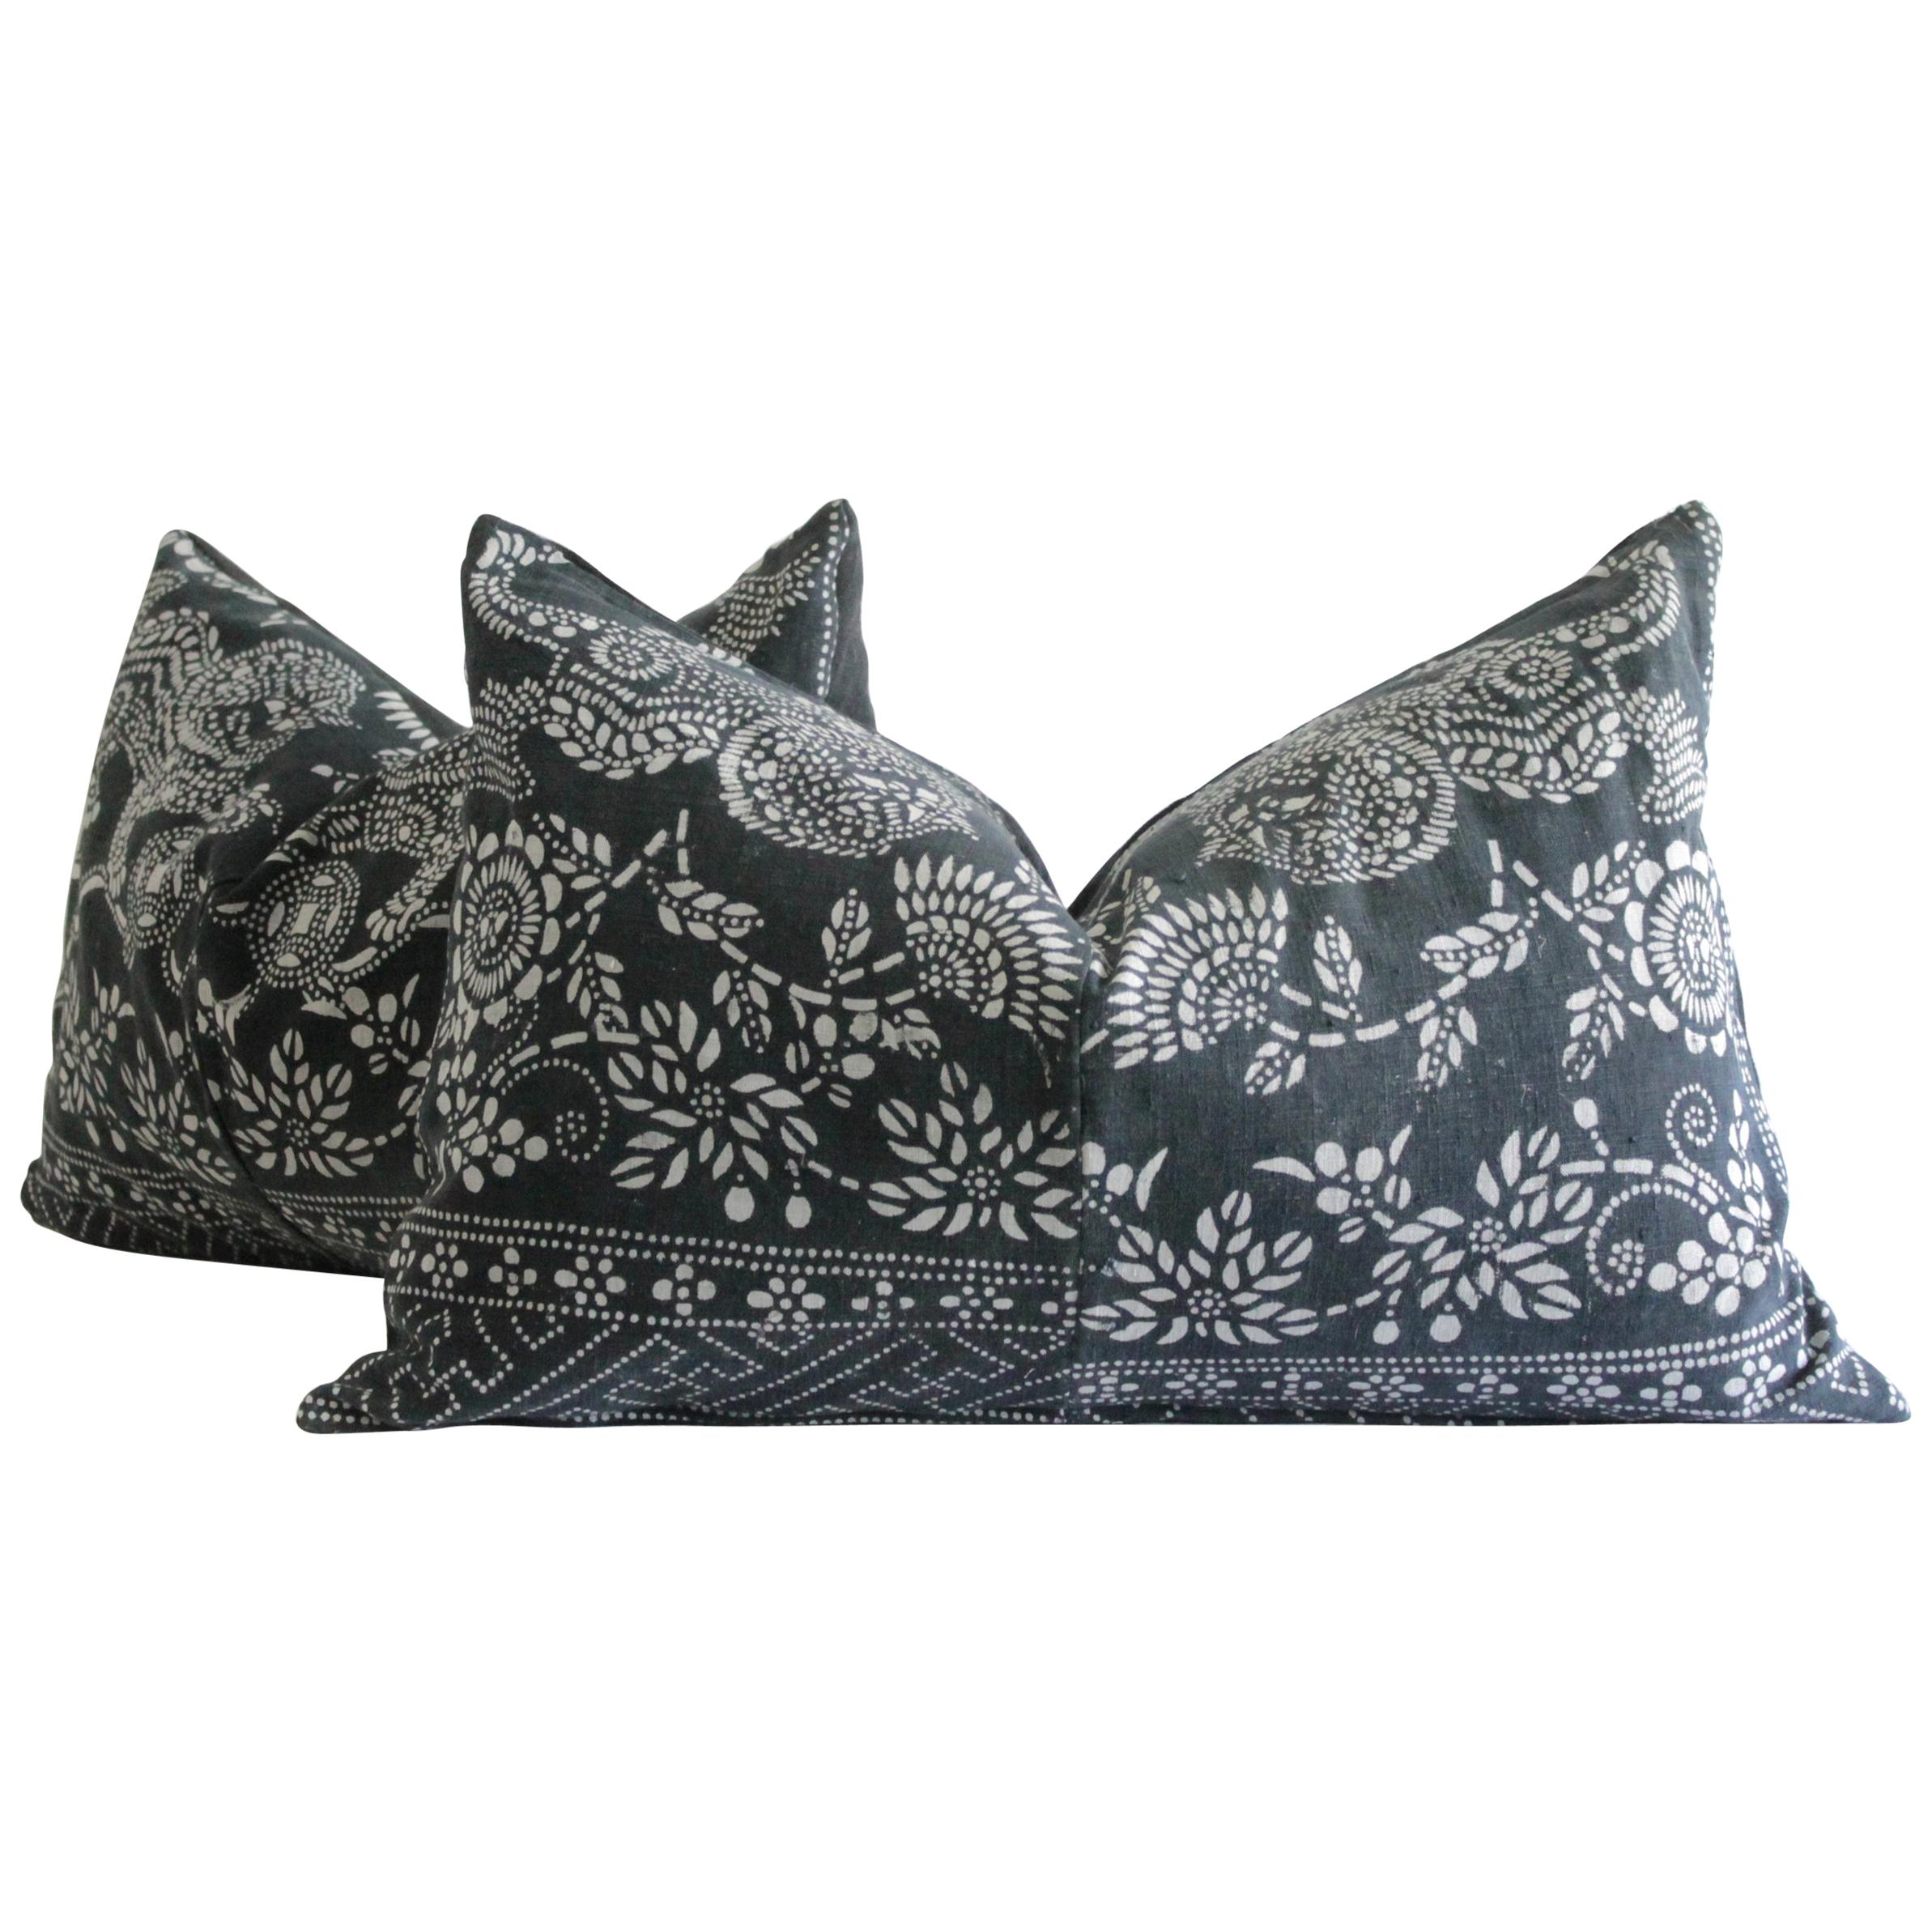 Pair of Vintage Batik Black Lumbar Pillows